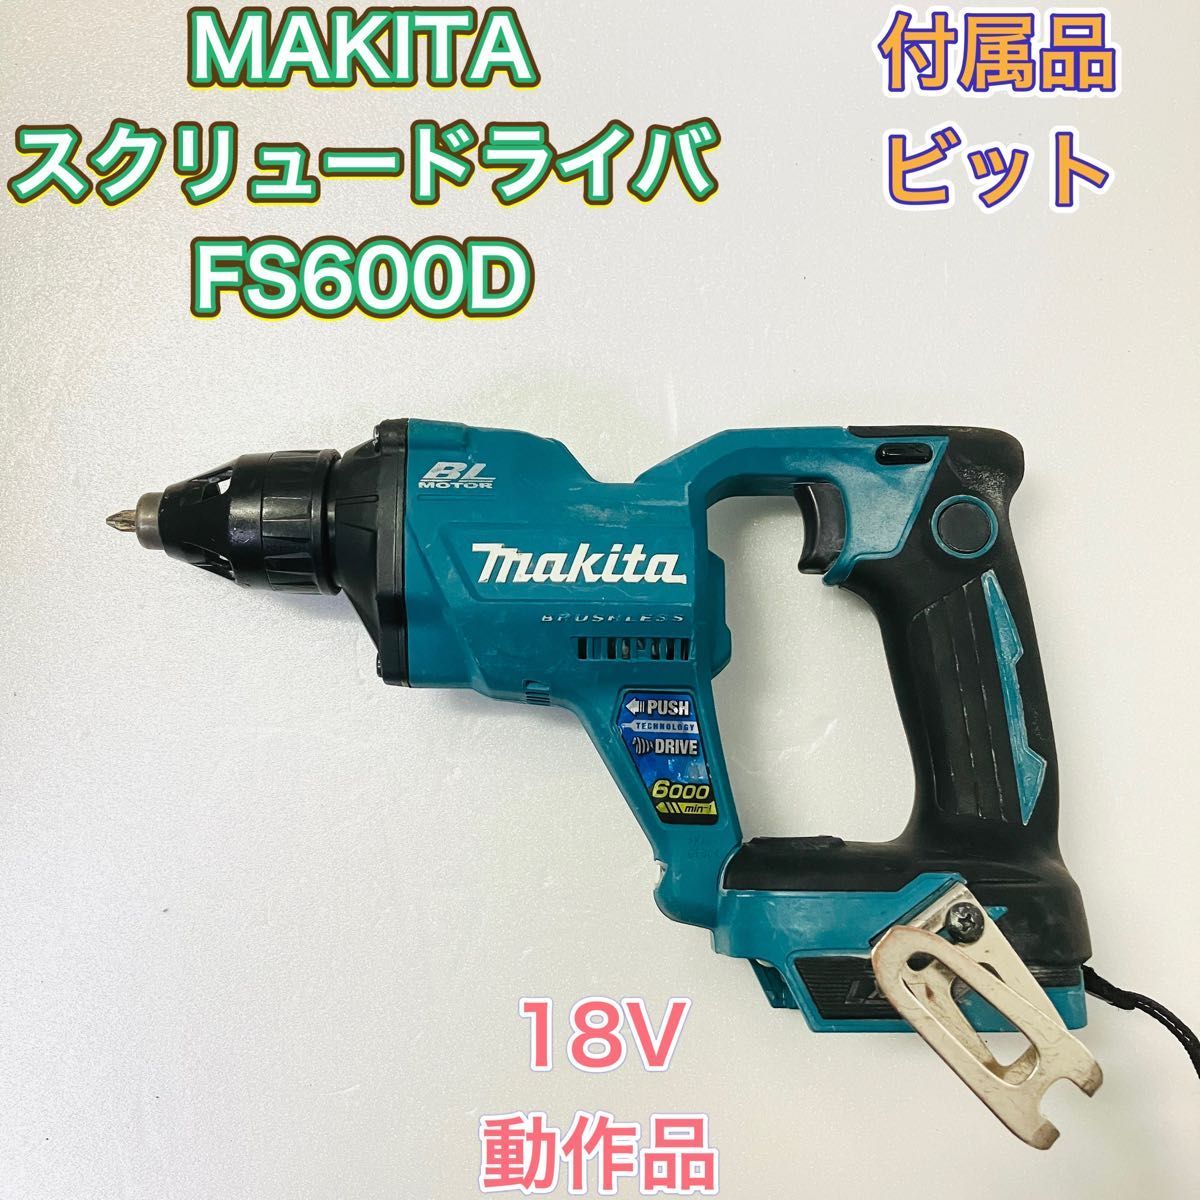 MAKITA マキタ FS600D スクリュードライバー 充電式 18V FS600DZ 本体のみ DIY 業務用